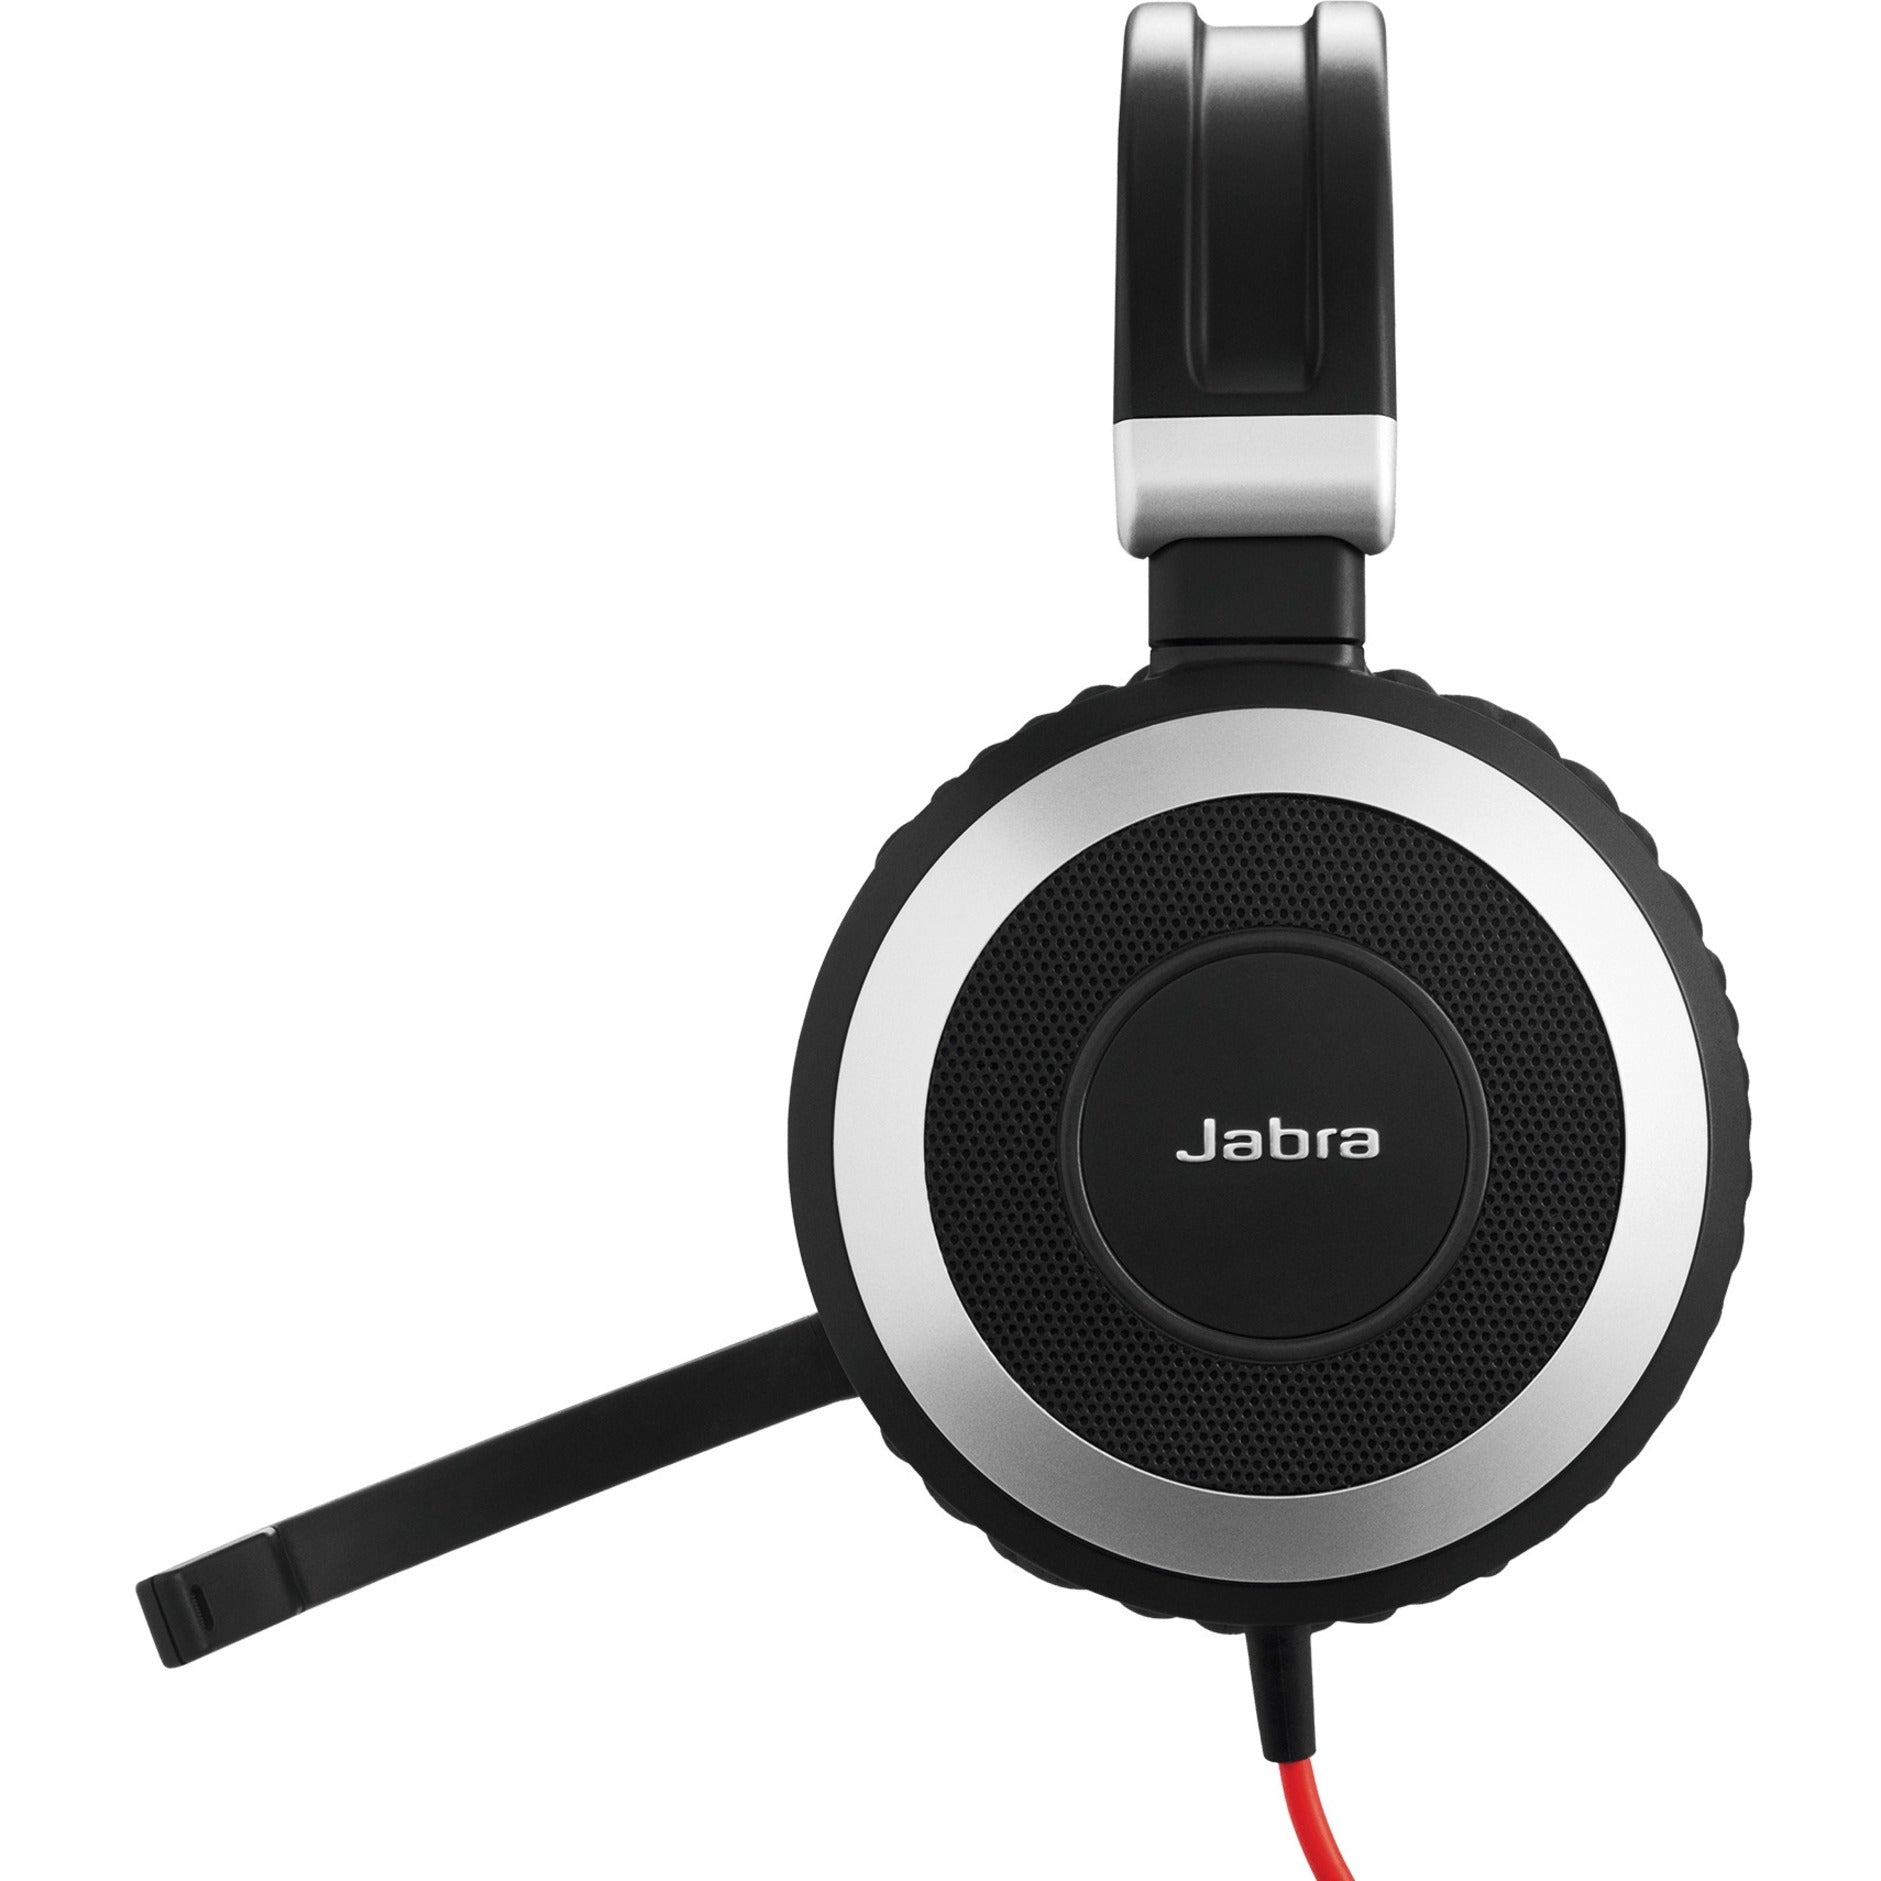 Jabra 7899-823-189 EVOLVE 80 MS Headset, Over-the-head Stereo Headset